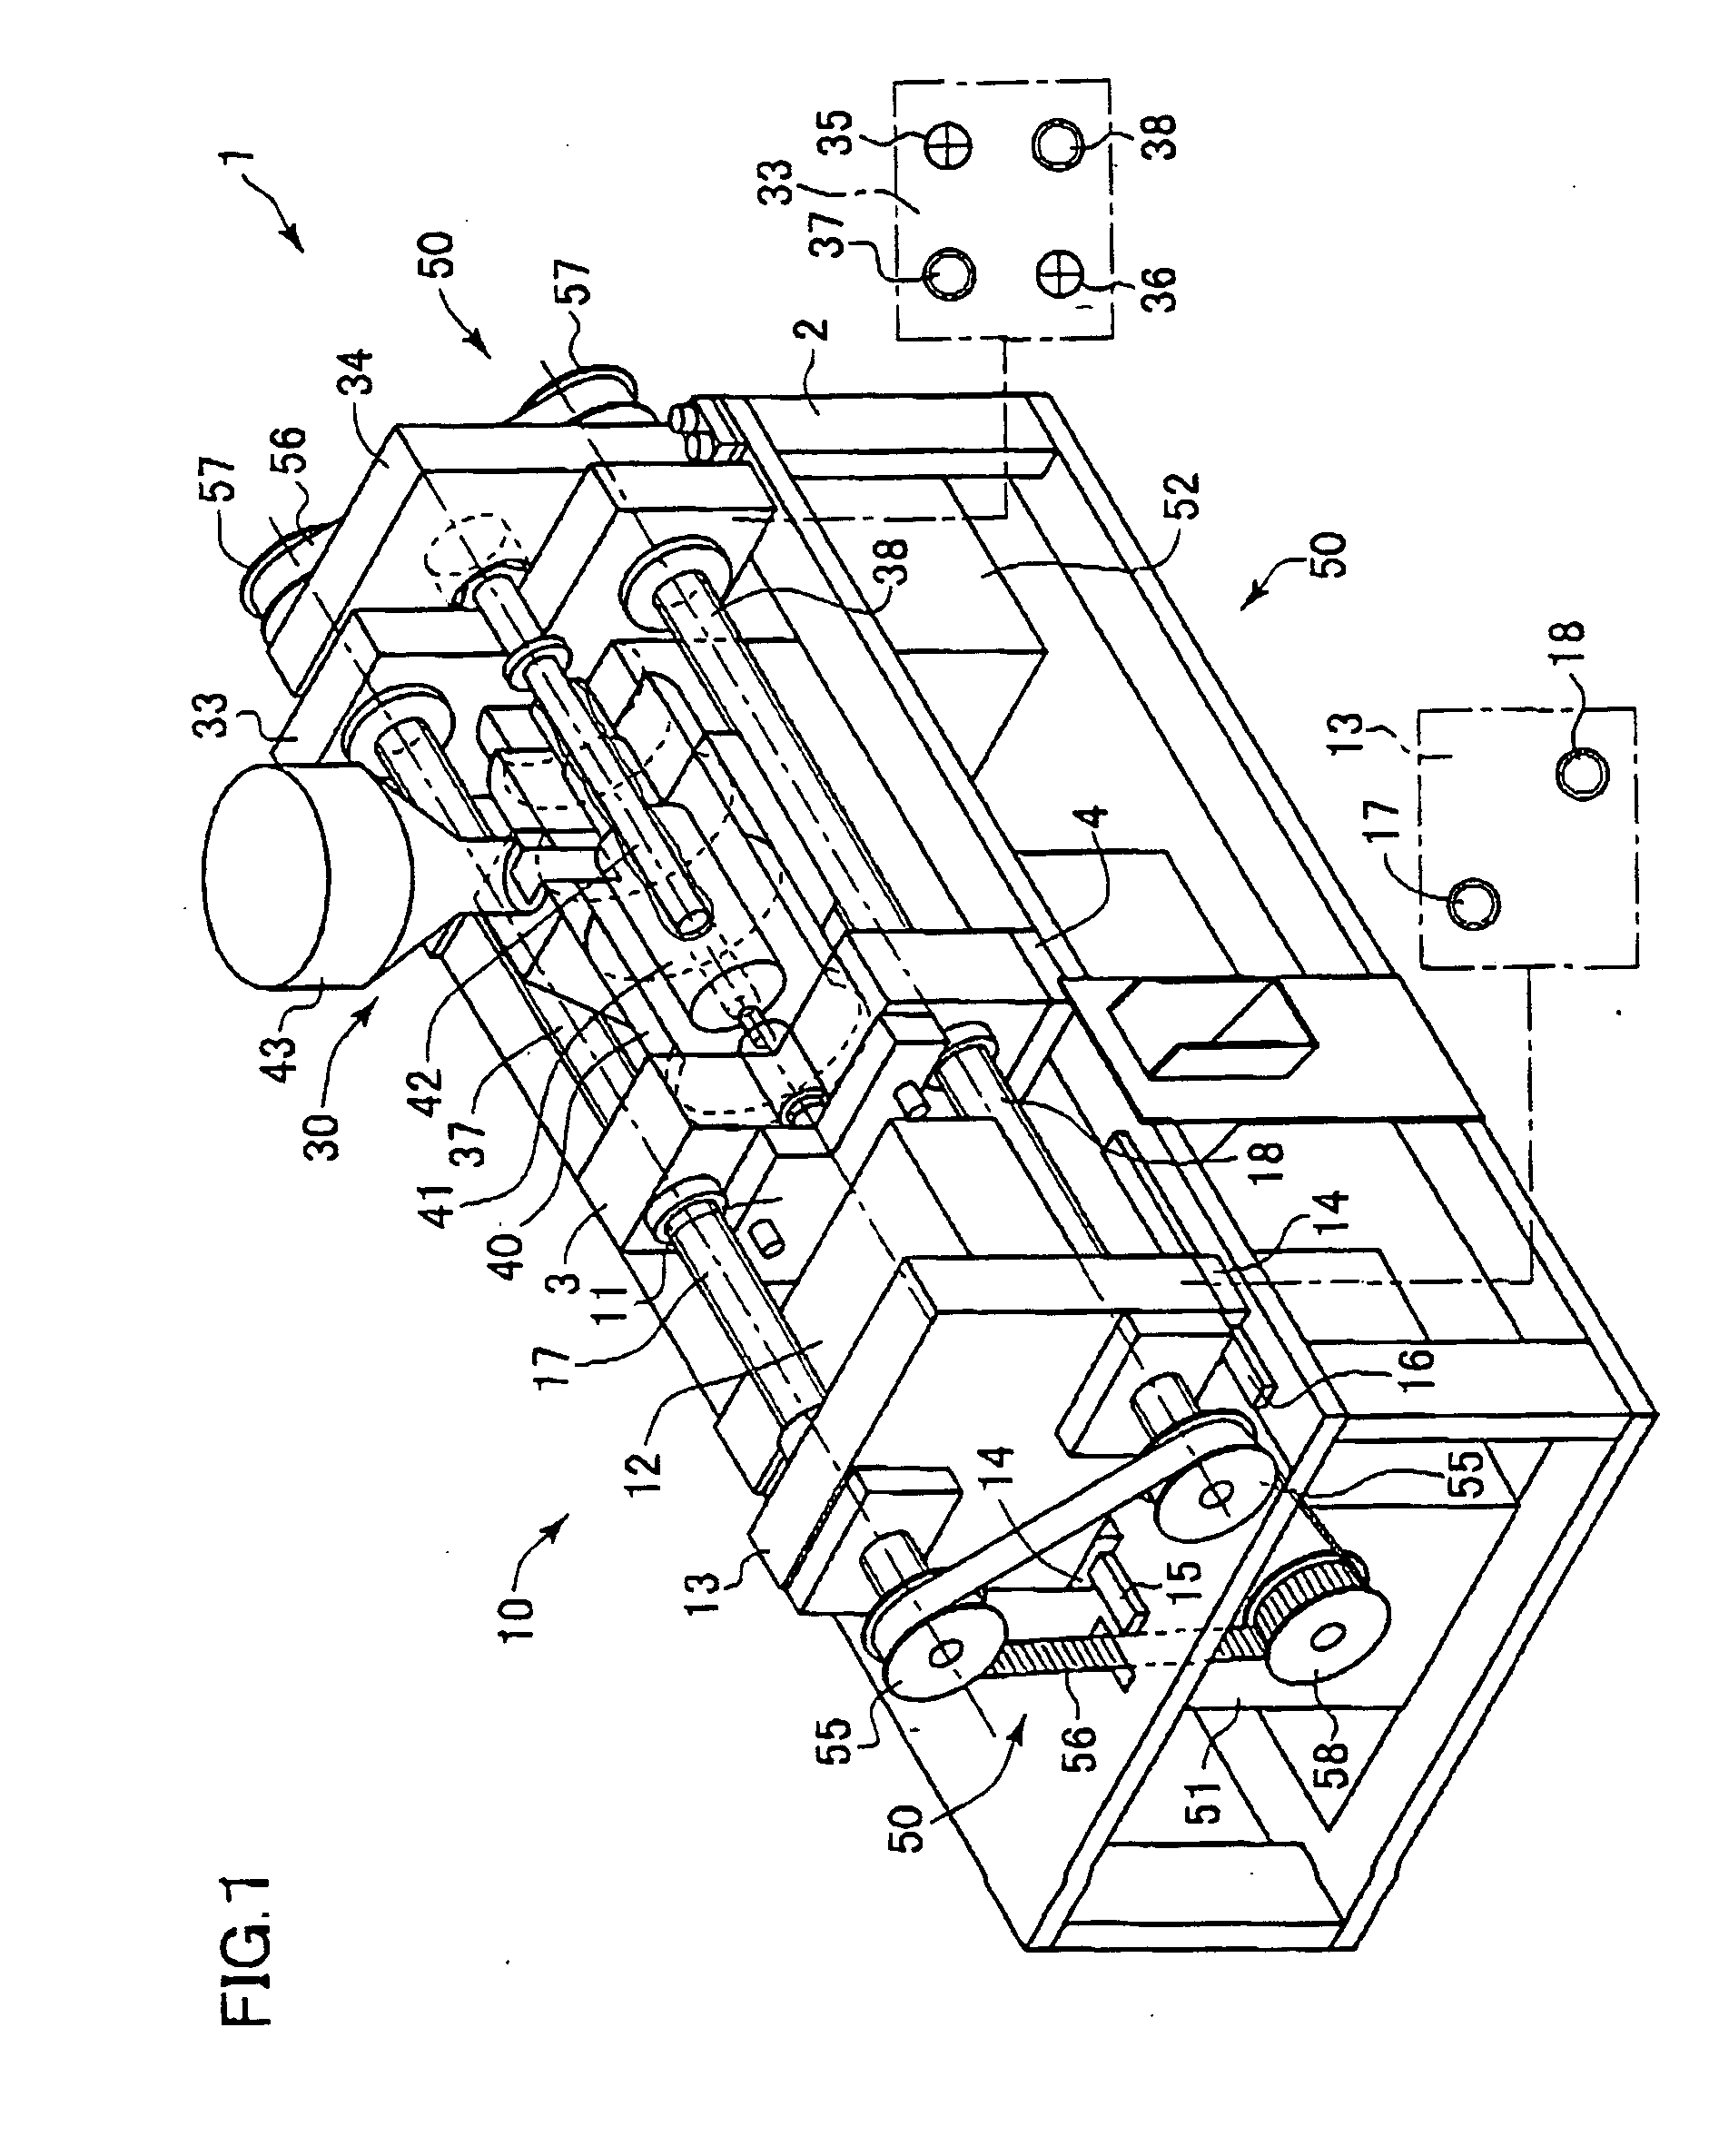 Motor-driven injection molding apparatus